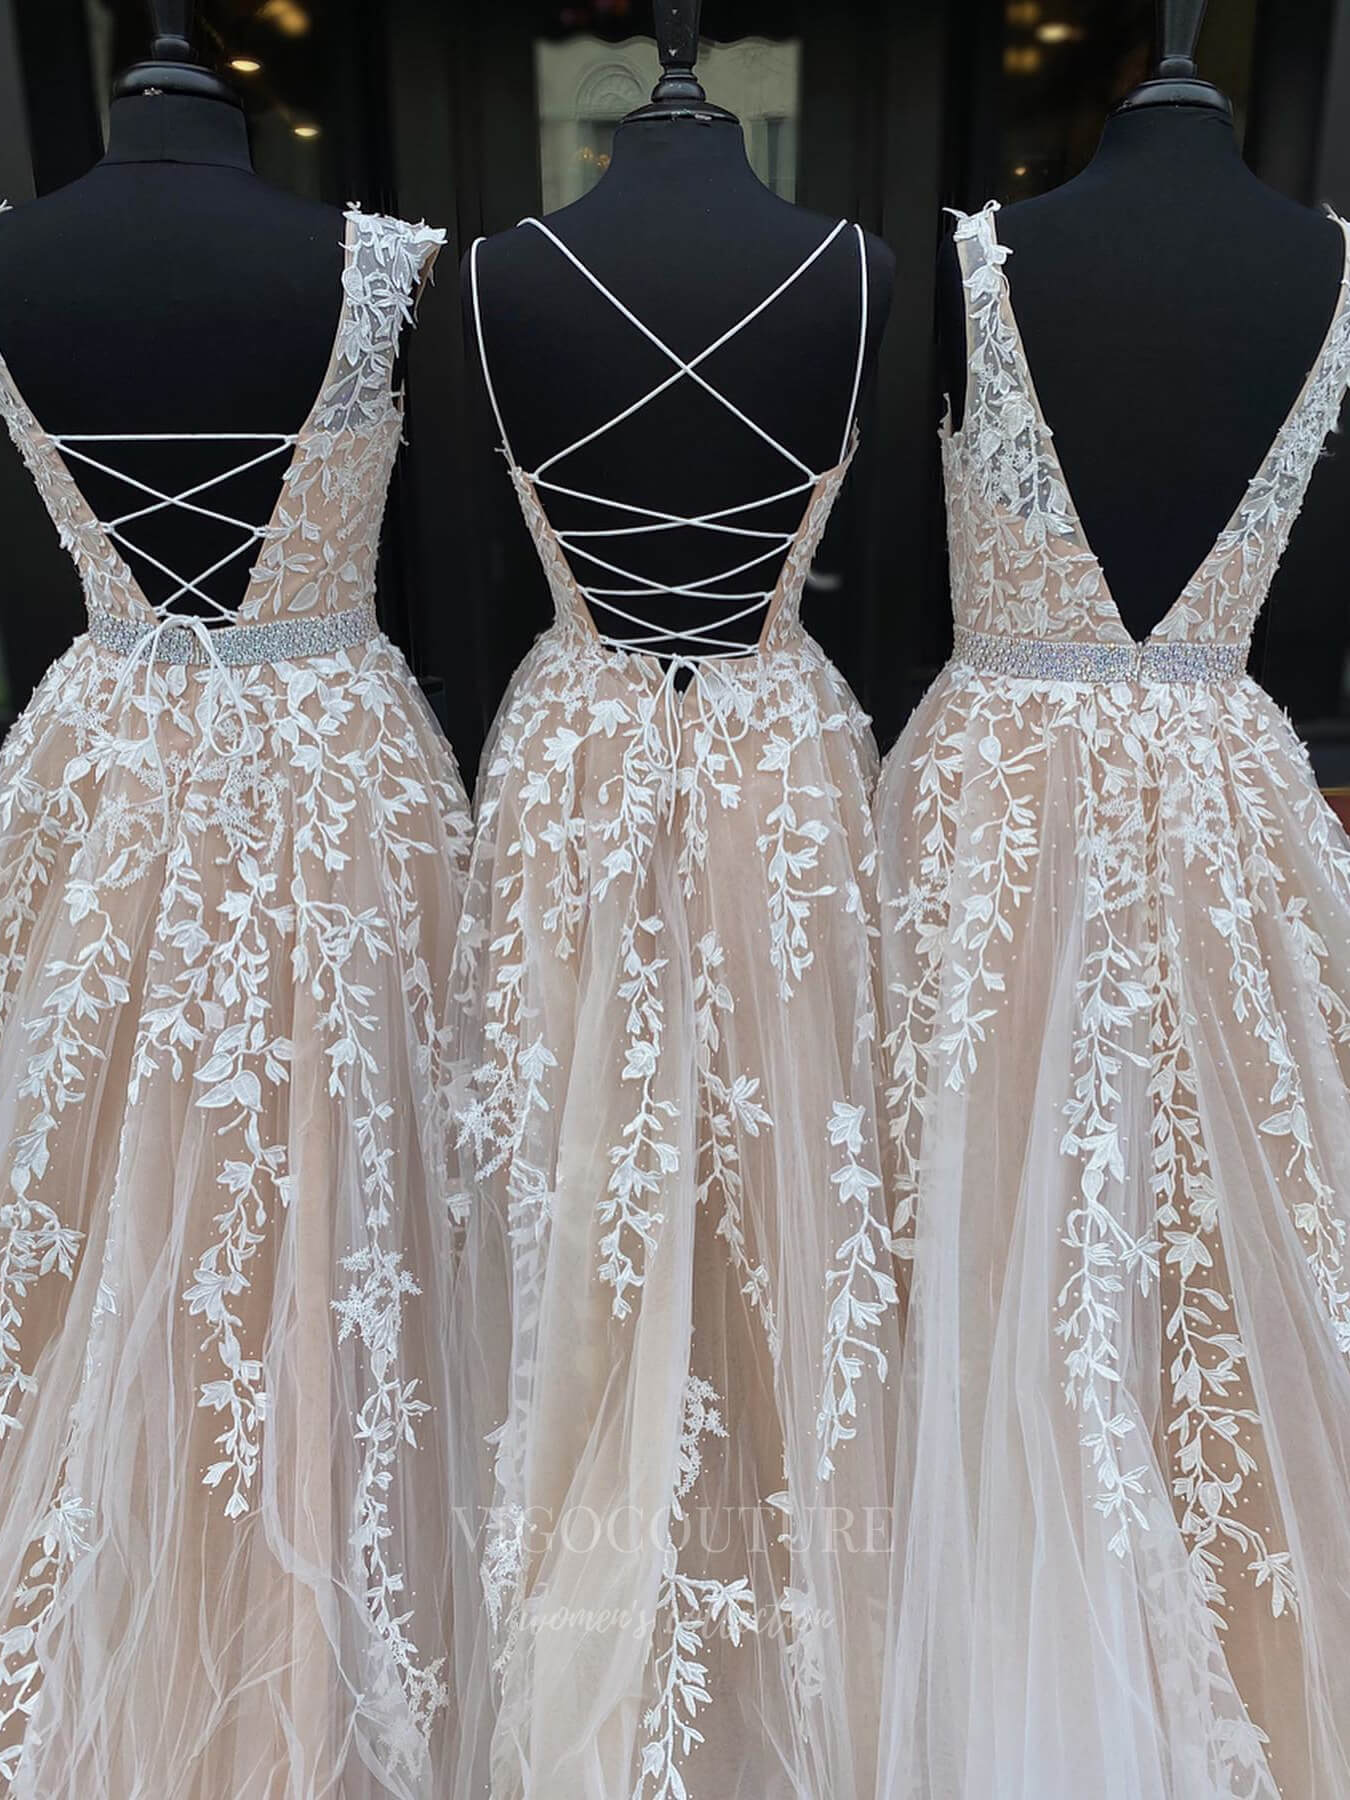 vigocouture-Khaki Lace Applique Prom Dress A-Line Evening Dresses 20928-Prom Dresses-vigocouture-